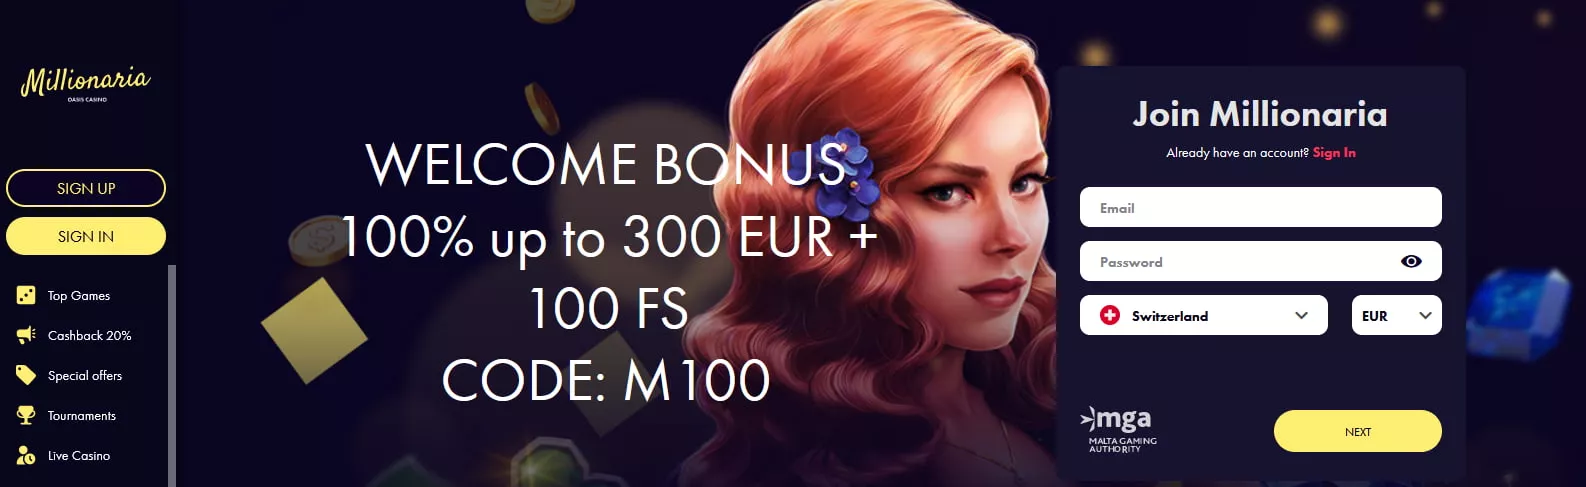 Millionaria Bonus Code M100 bis 300€ + 100 Freispiele